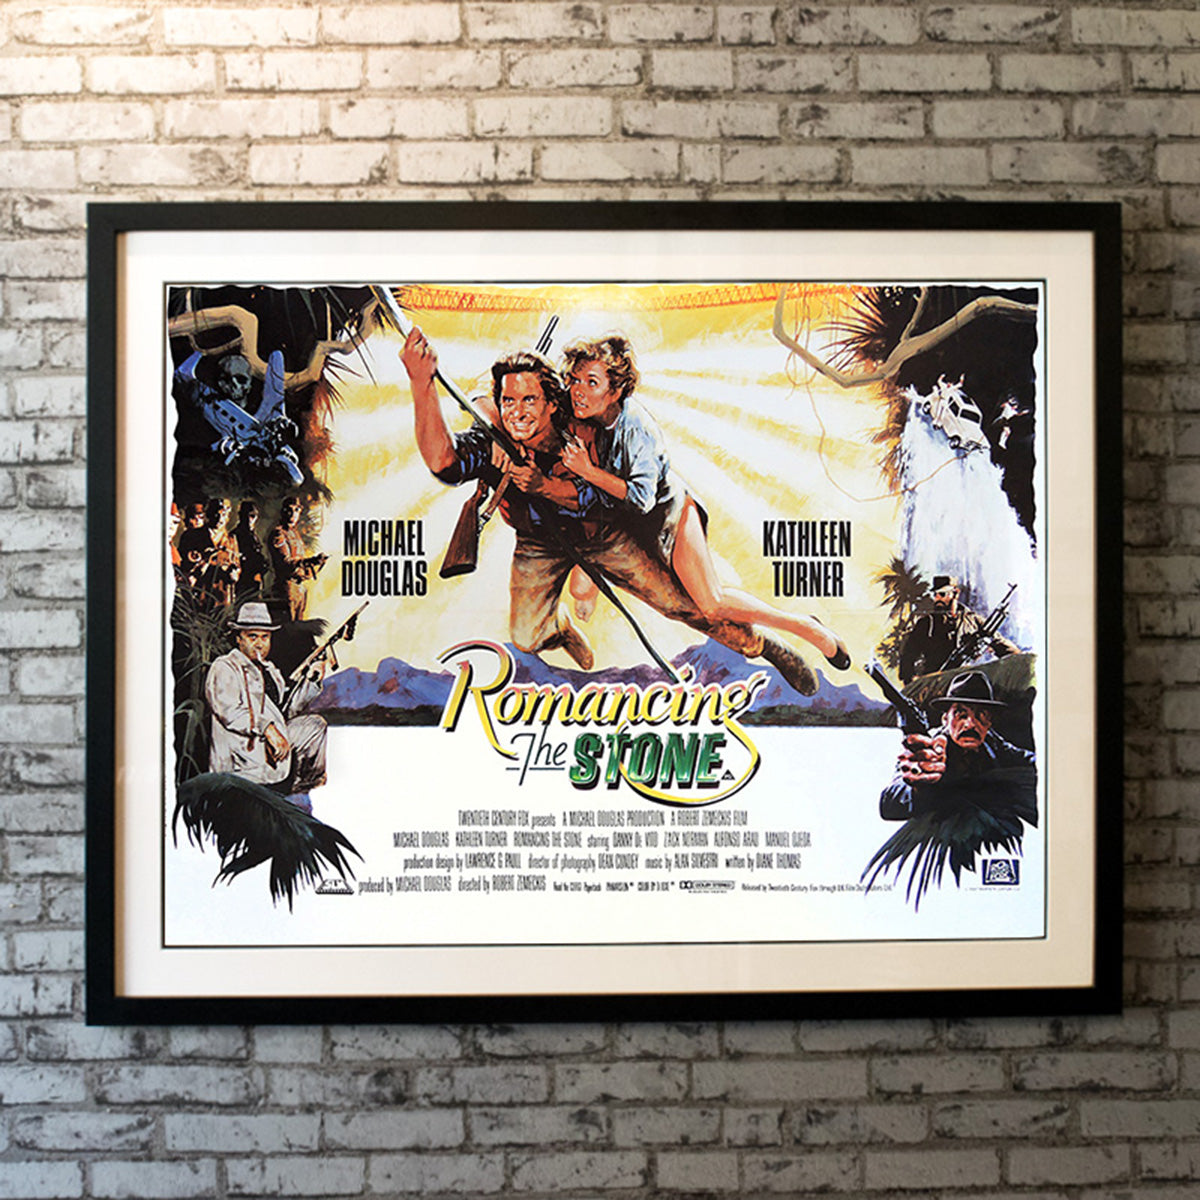 Original Movie Poster of Romancing The Stone (1984)